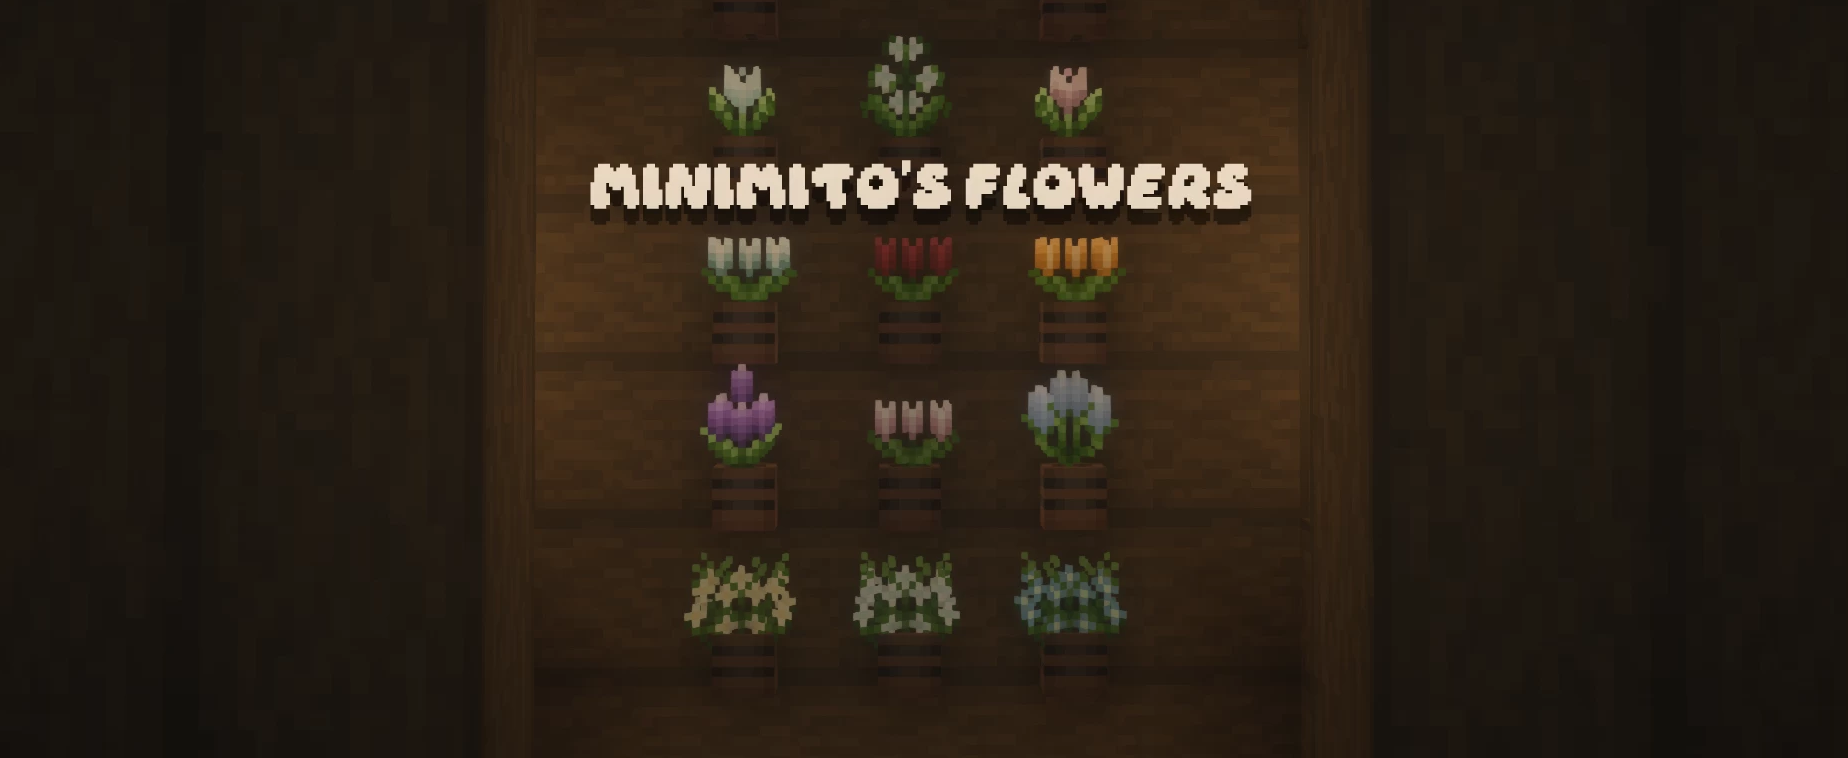 Minimito's Flowers screenshot 1